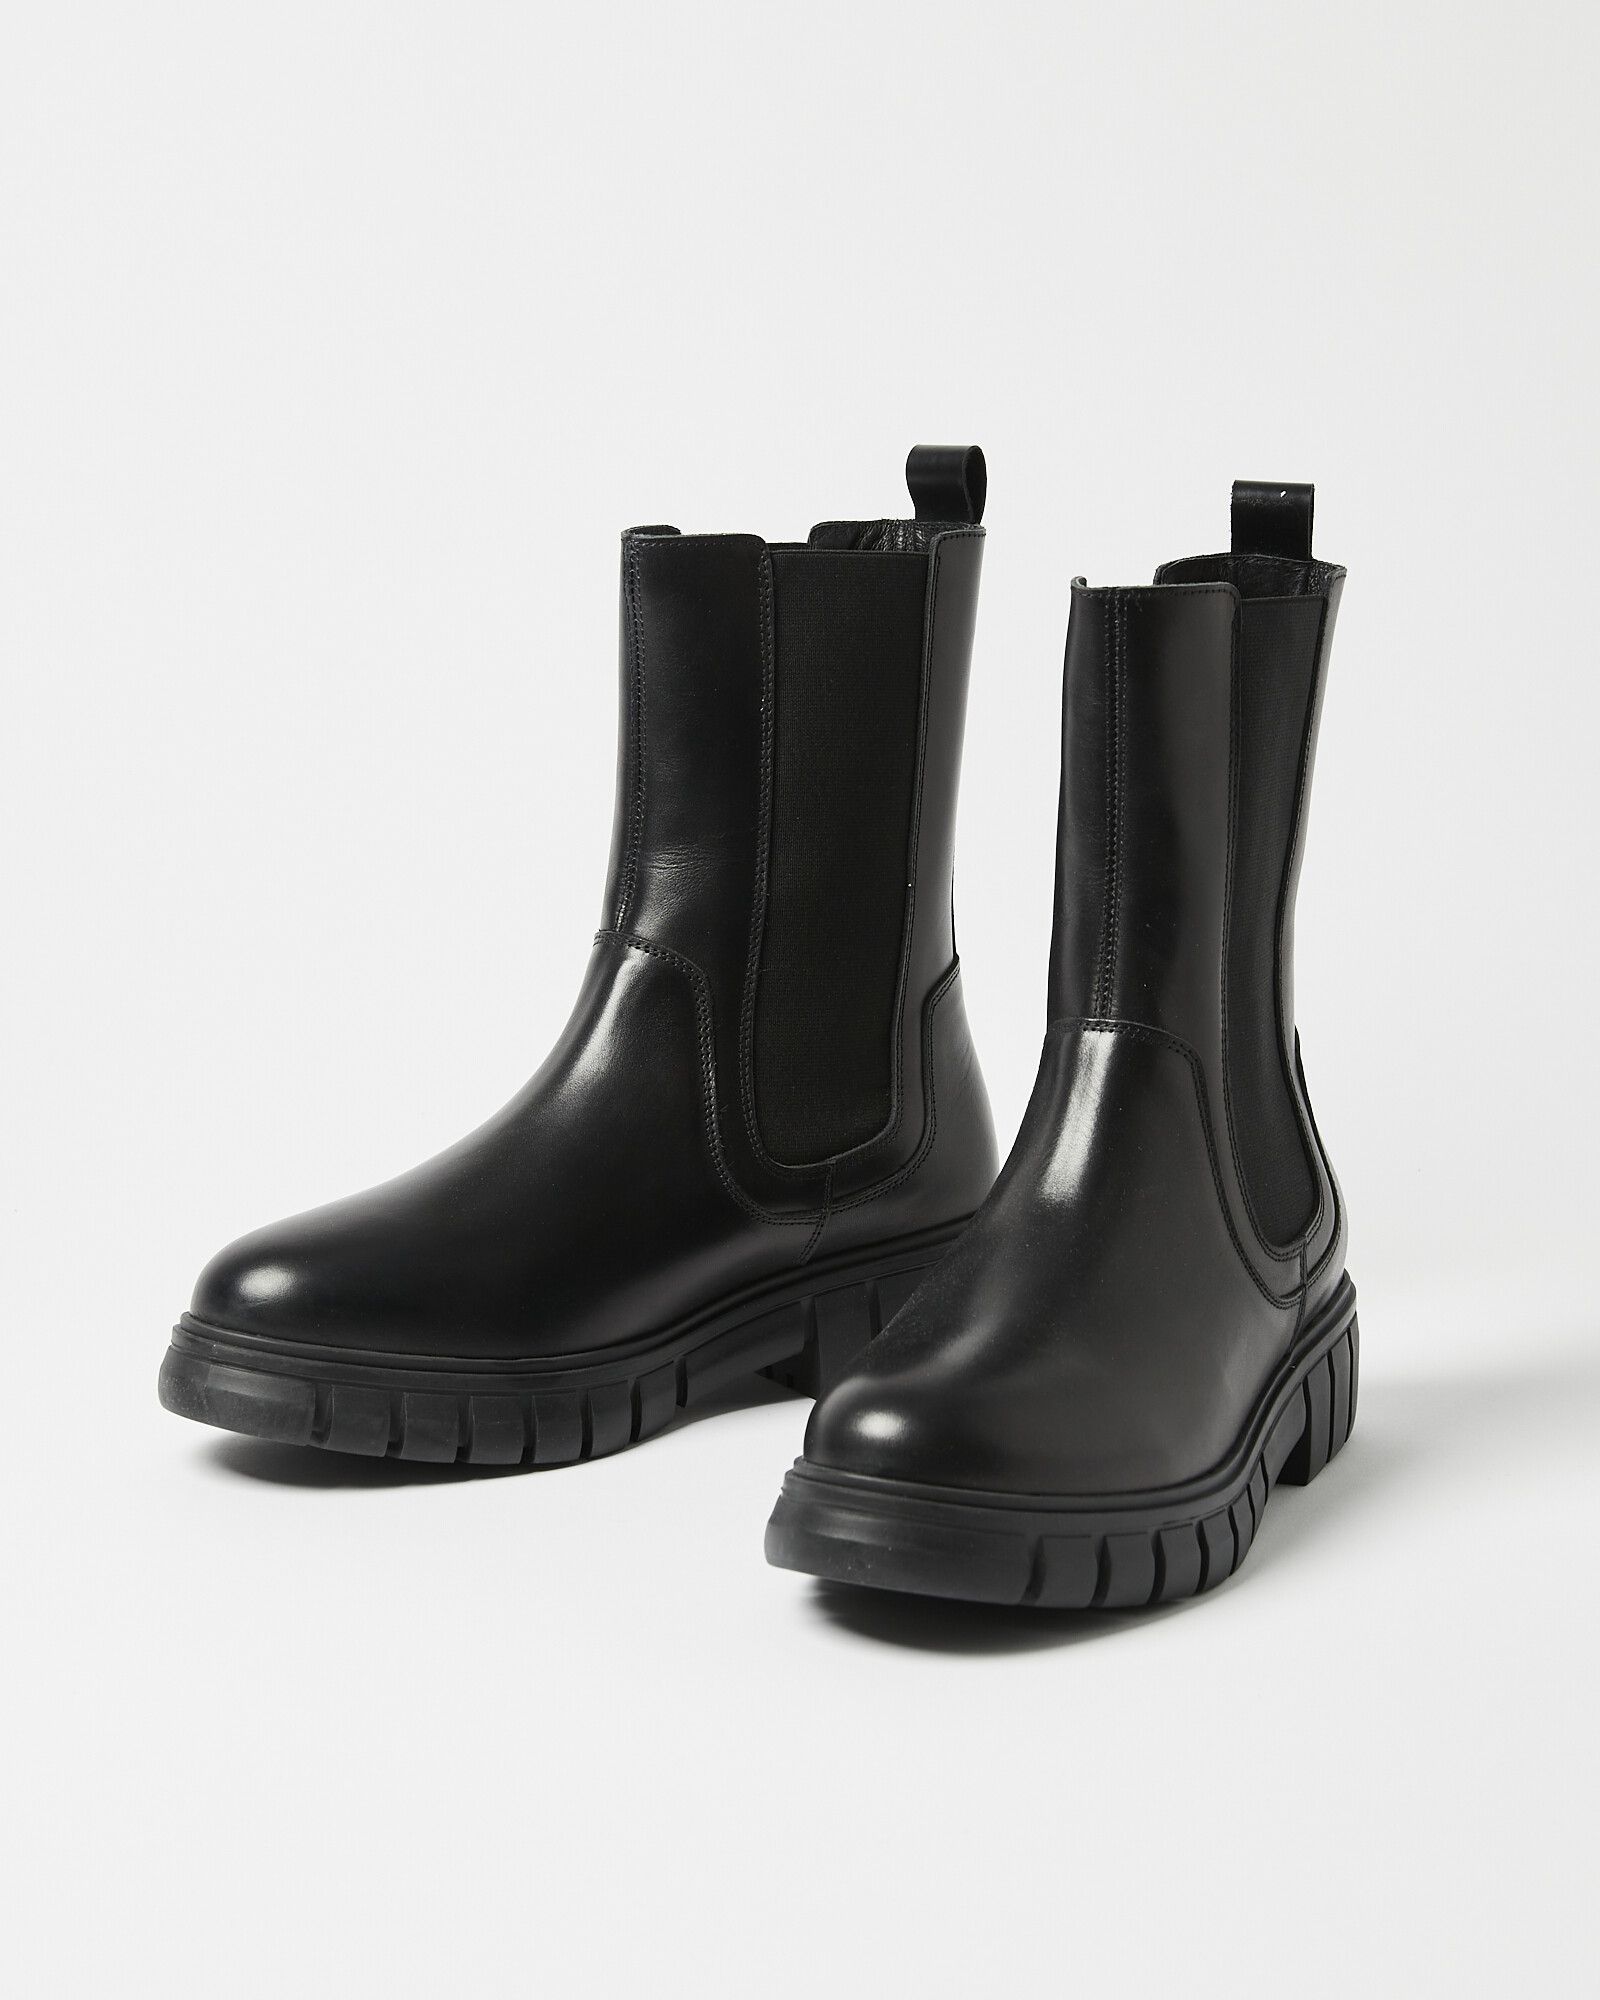 Shoe The Bear Rebel High Black Leather Chelsea Boots | Oliver Bonas